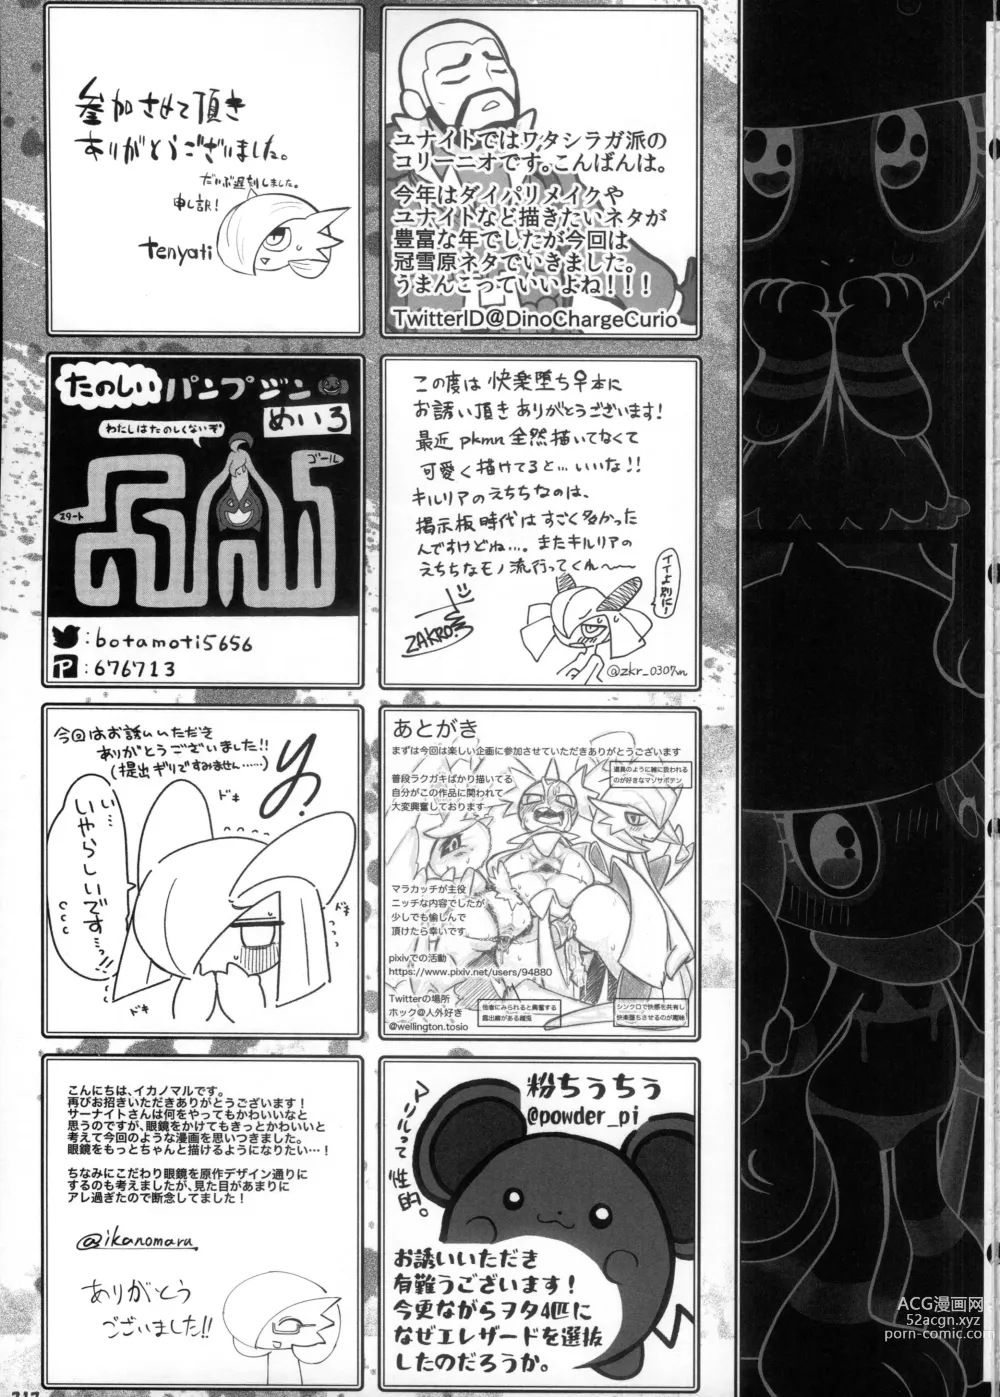 Page 216 of doujinshi Kairaku Ochi ♀ 3